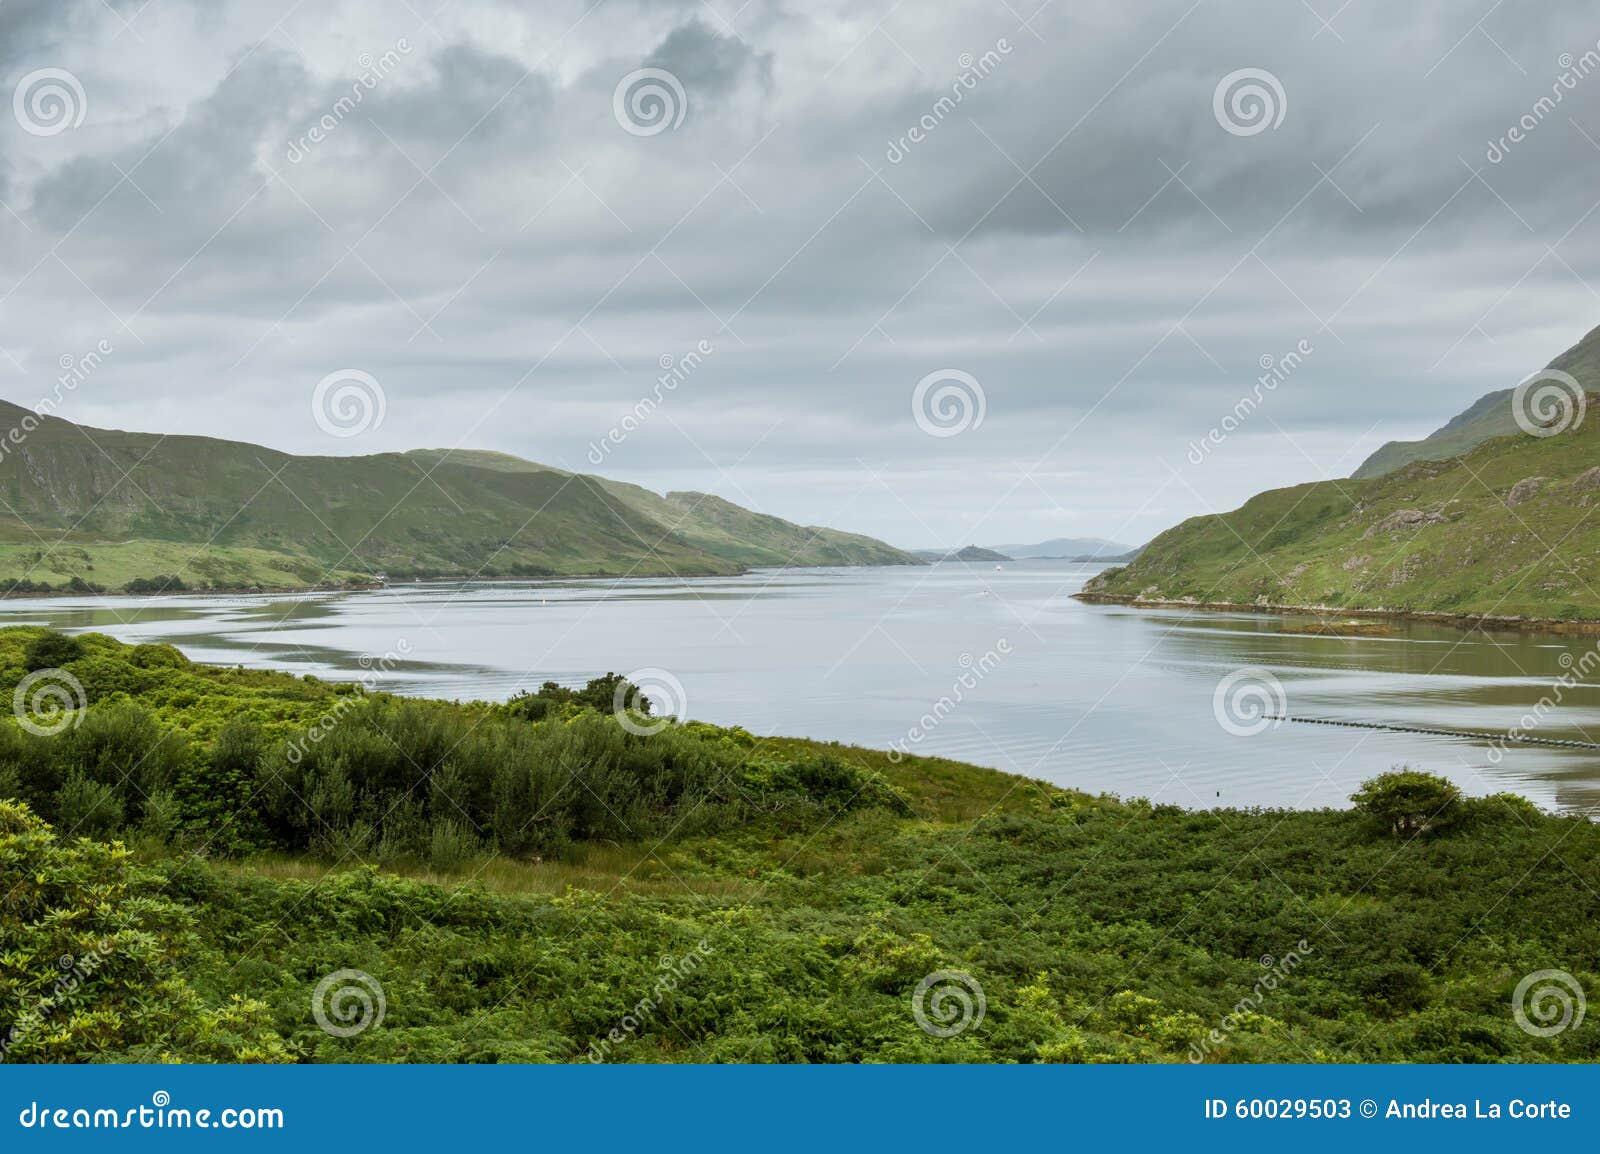 Killary Fjord, Ireland stock image. Image of water, scenic - 60029503